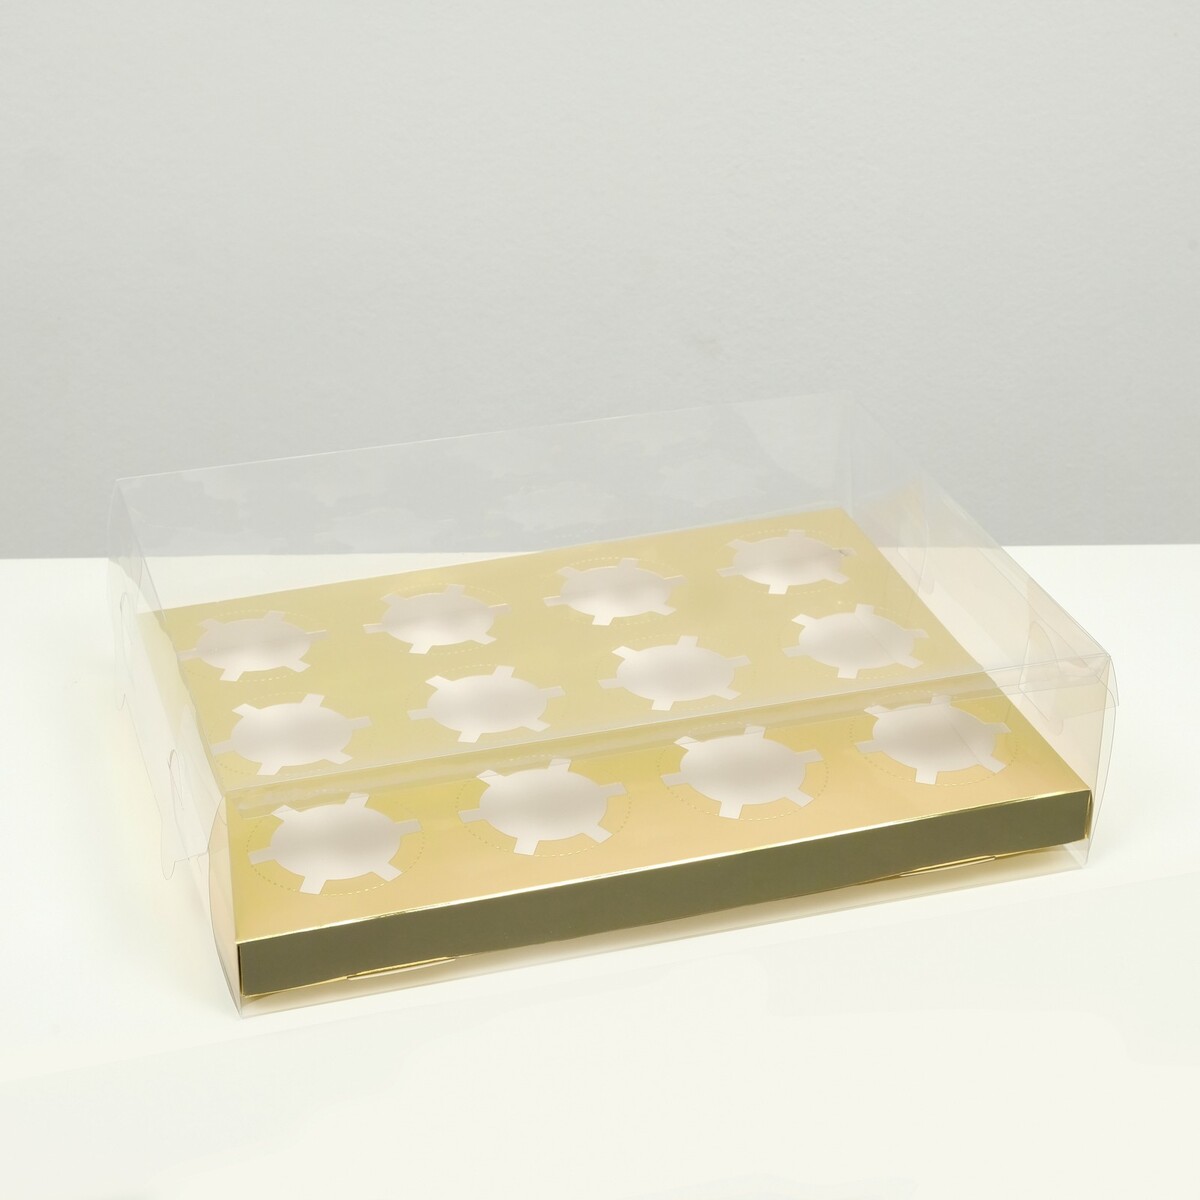 Коробка на 12 капкейков, золото, 34,7 × 26,3 × 10 см коробка под 6 капкейков